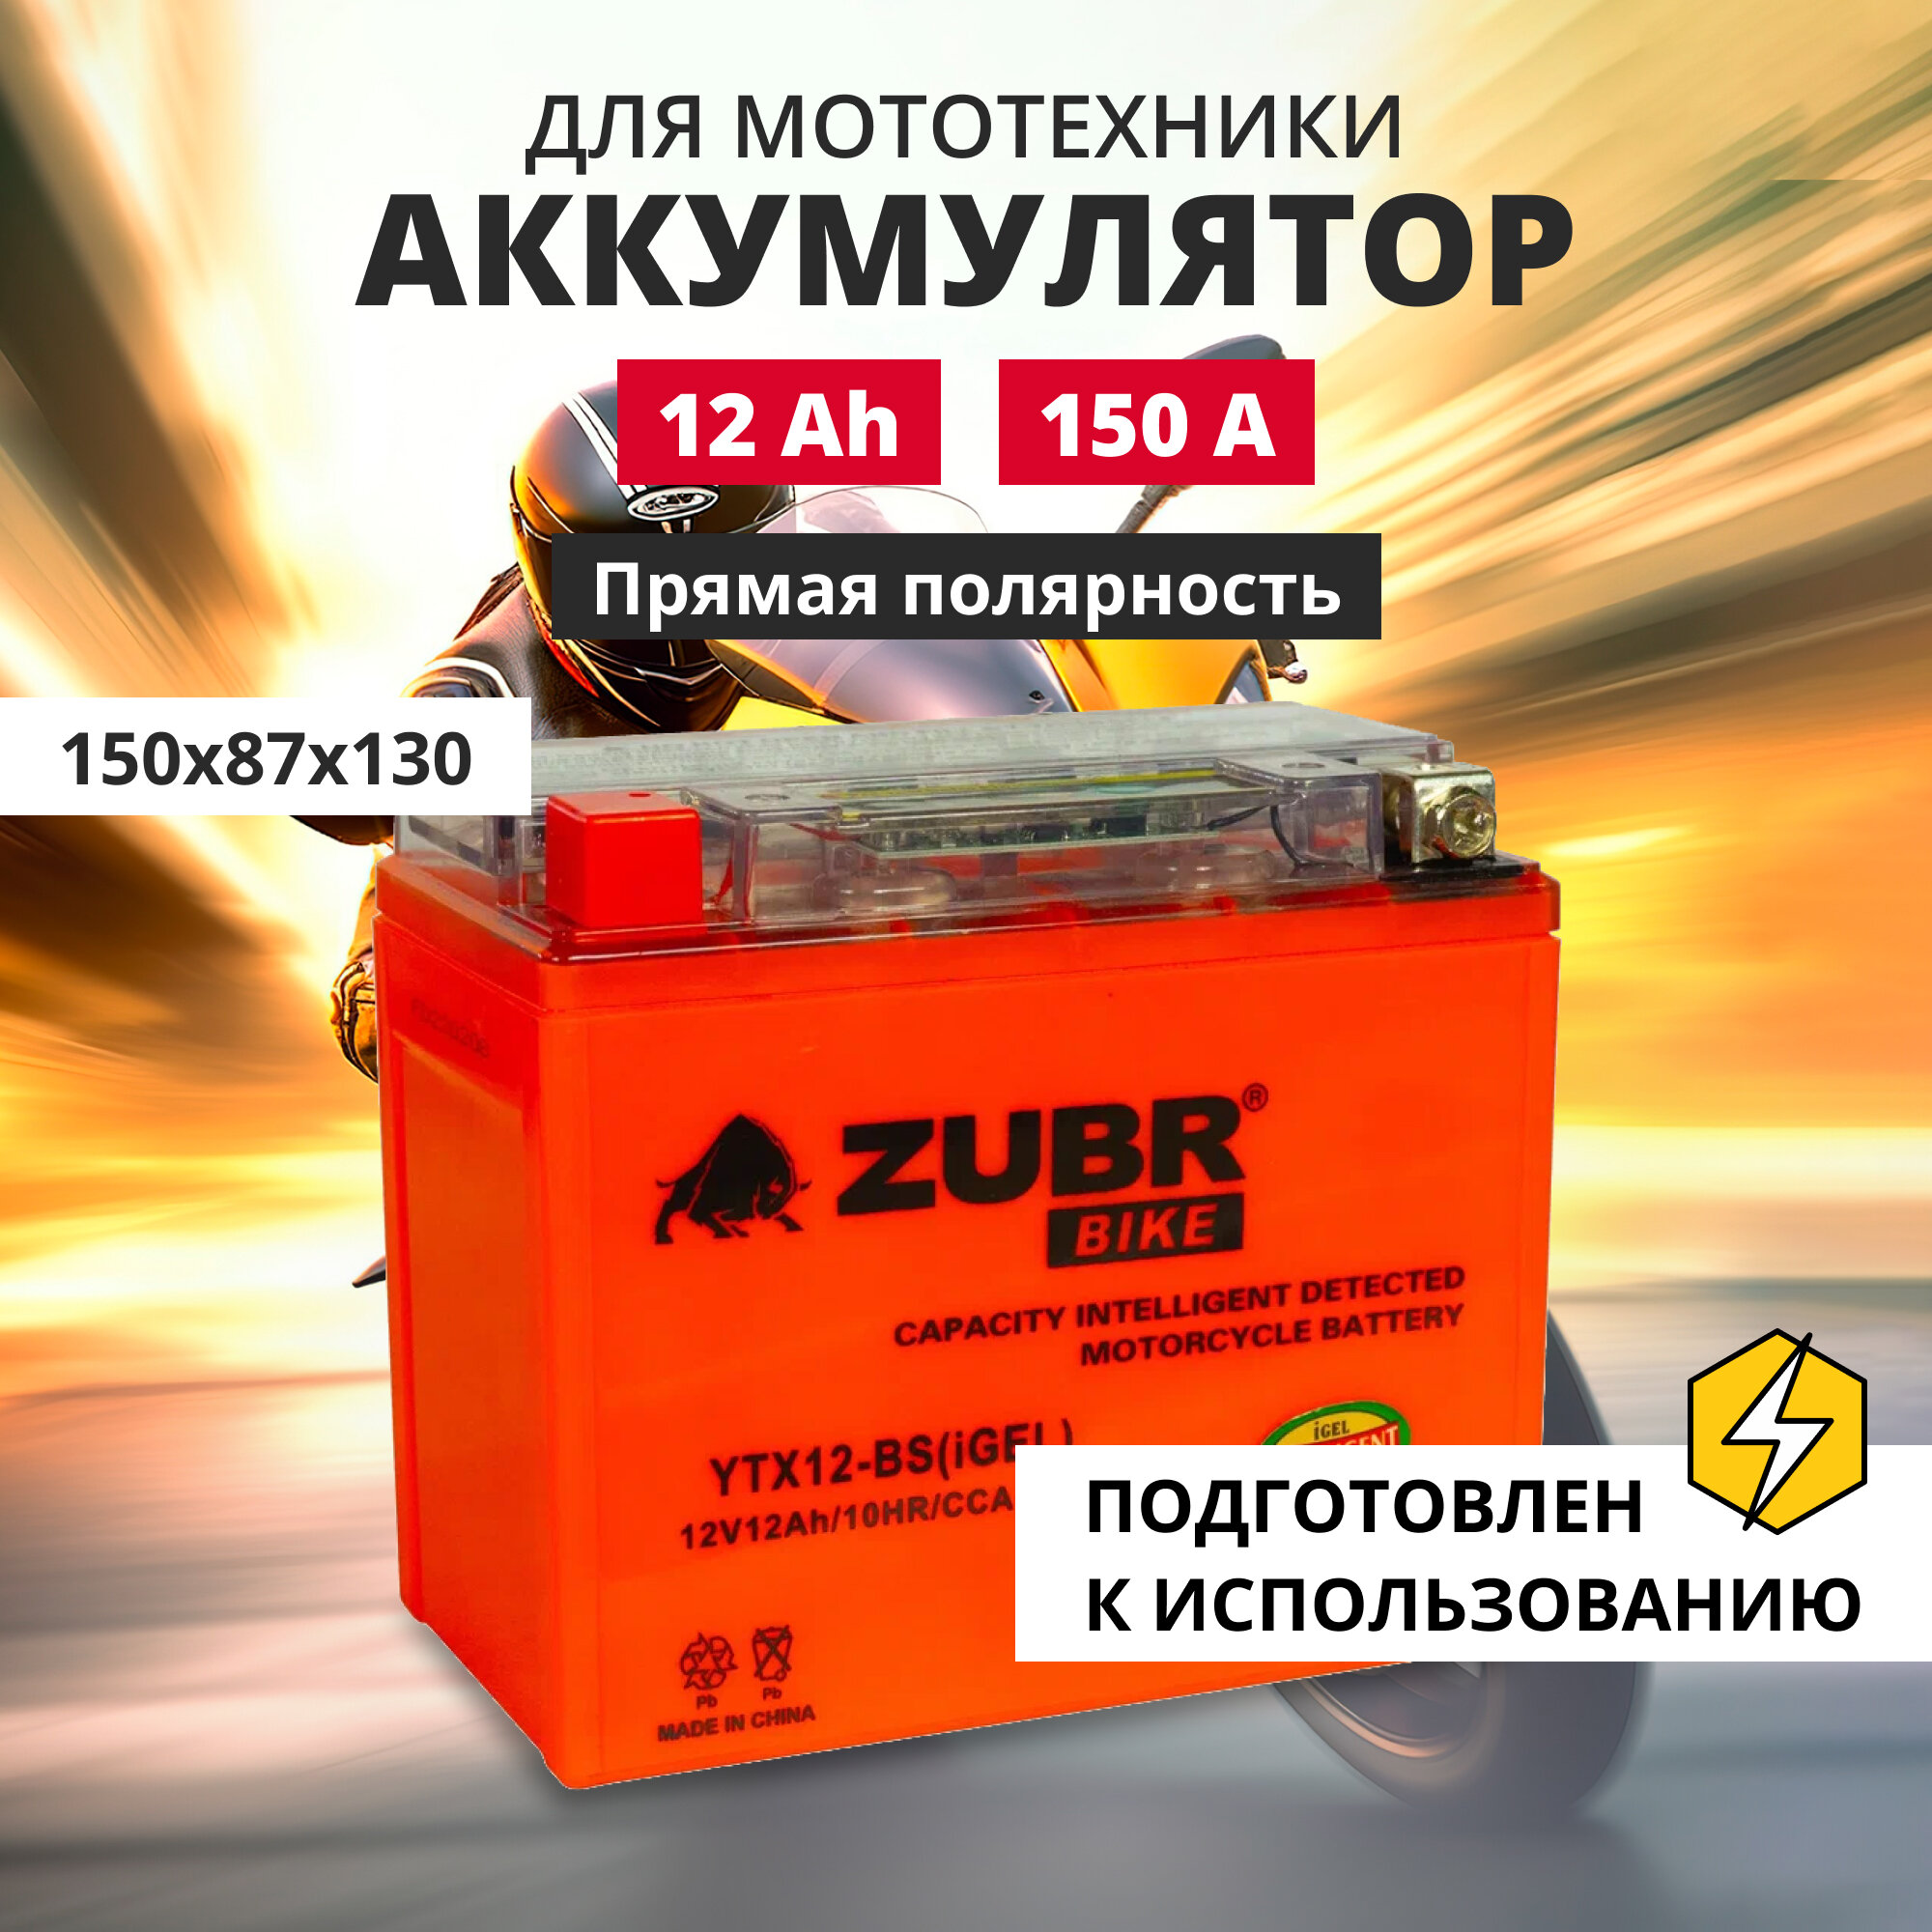 Аккумулятор для мотоцикла 12v ZUBR YTX12-BS(iGEL) прямая полярность 12 Ah 150 A гелевый, акб на скутер, мопед, квадроцикл 150x87x130 мм